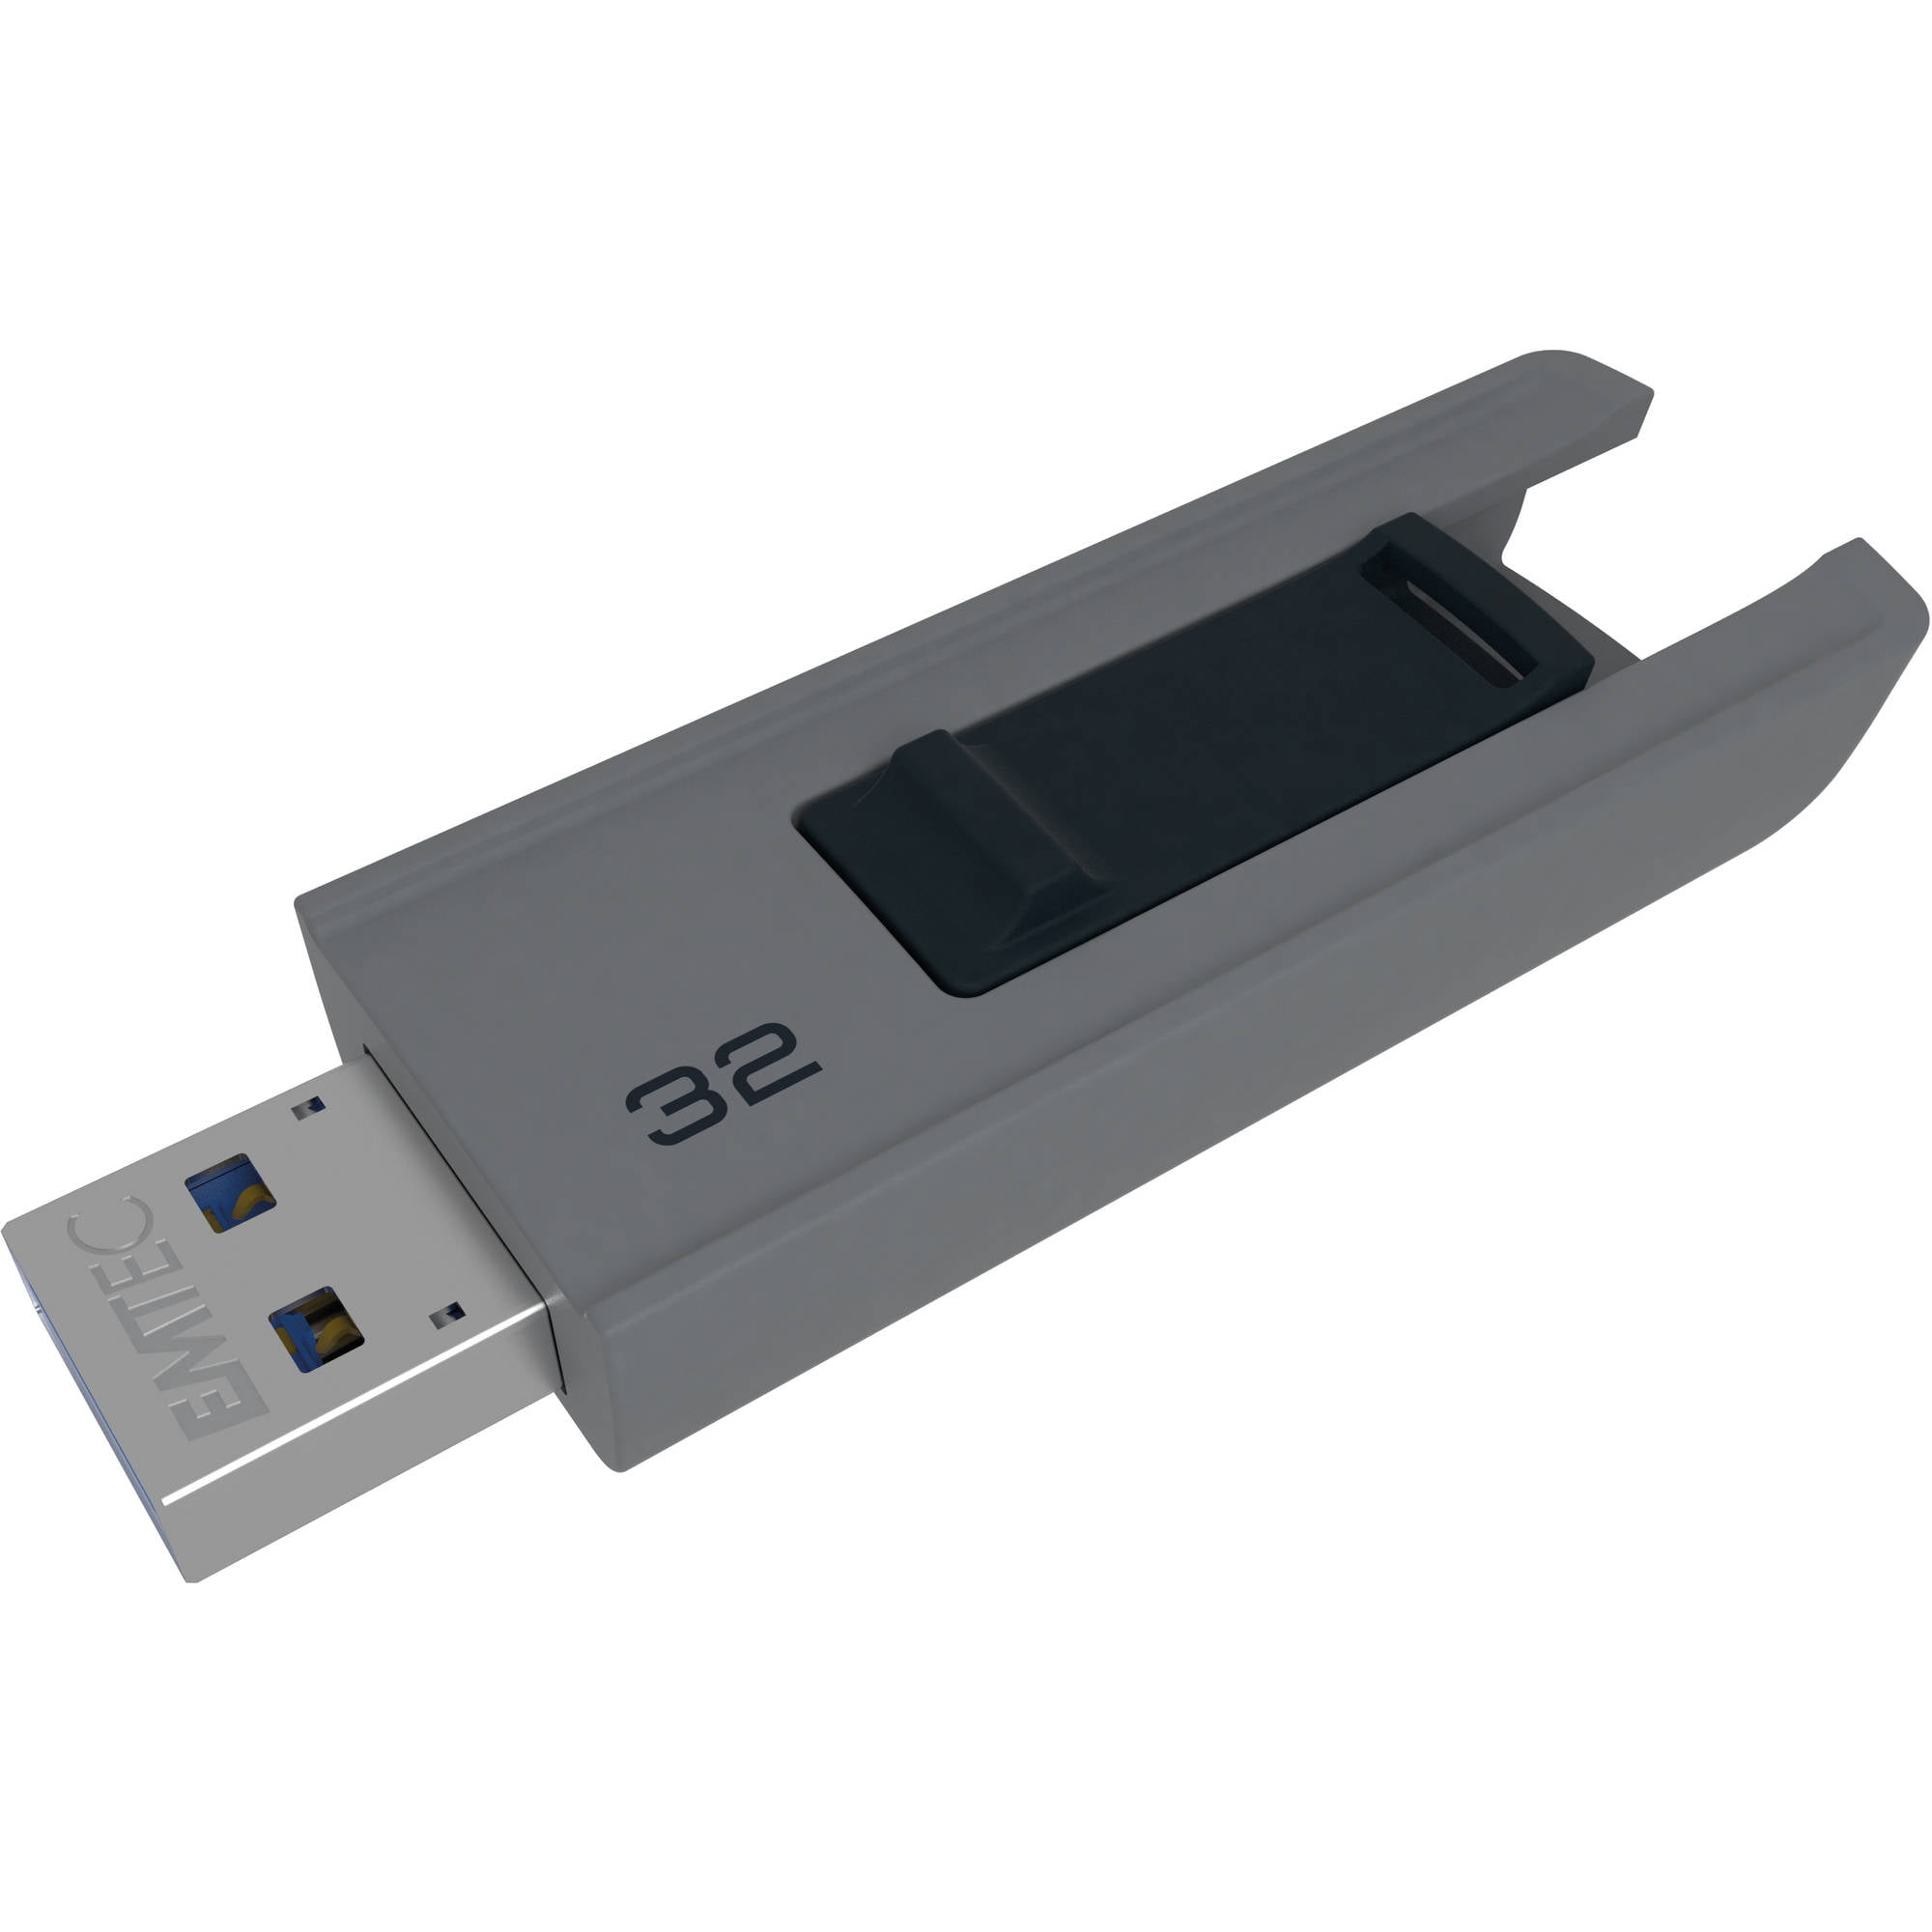 SanDisk 16Gb 32Gb 64Gb 128Gb 256Gb Clé USB 3.1 3.0 OTG TYPE-C USB